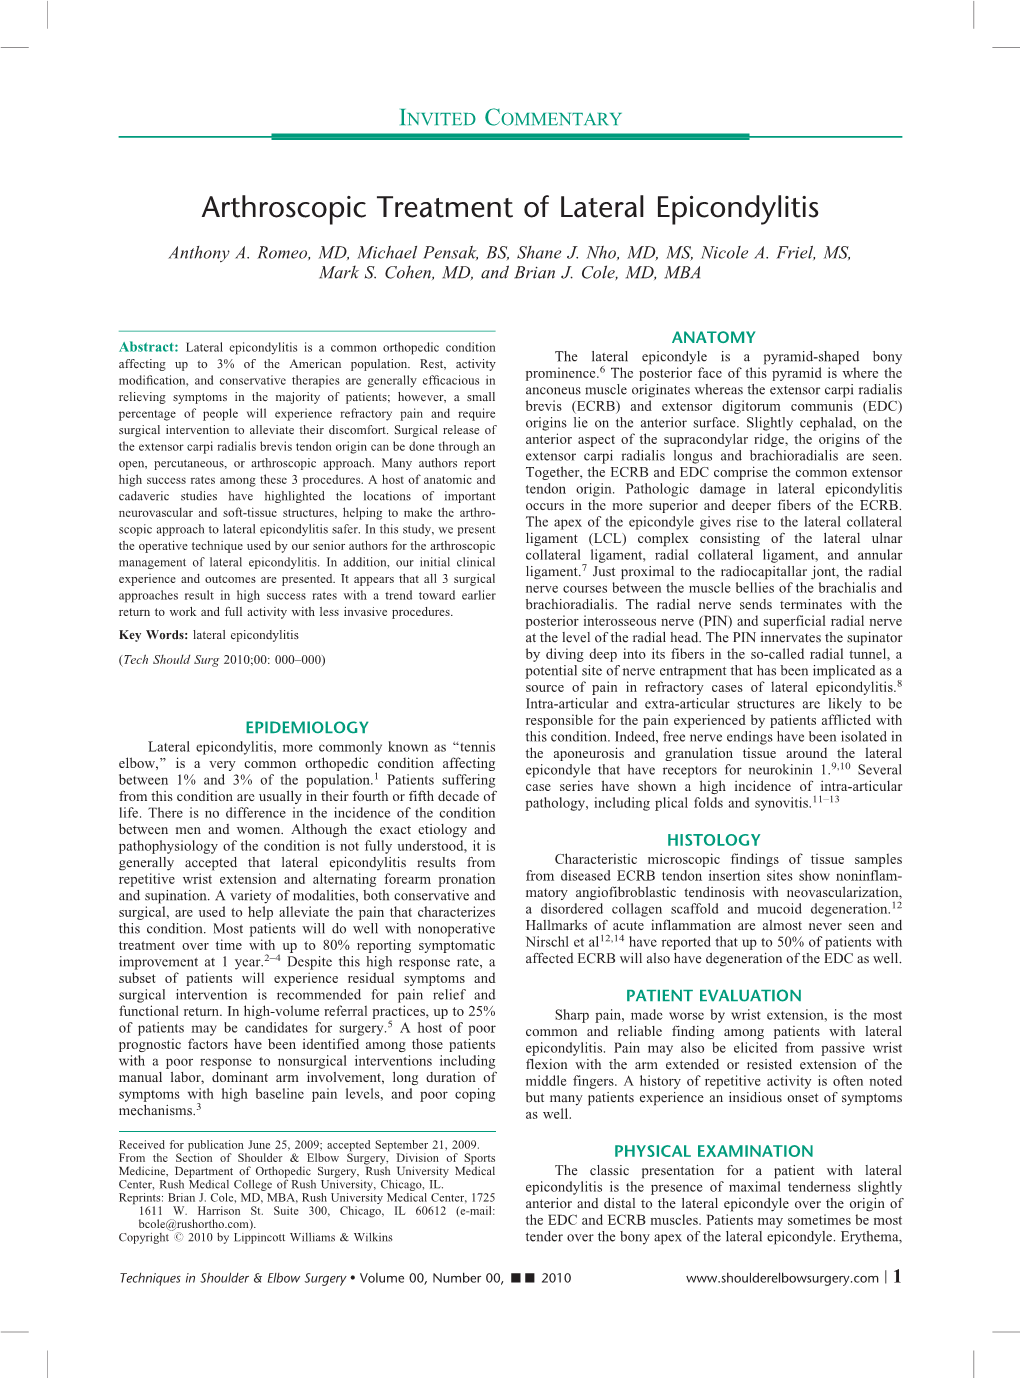 Arthroscopic Treatment of Lateral Epicondylitis